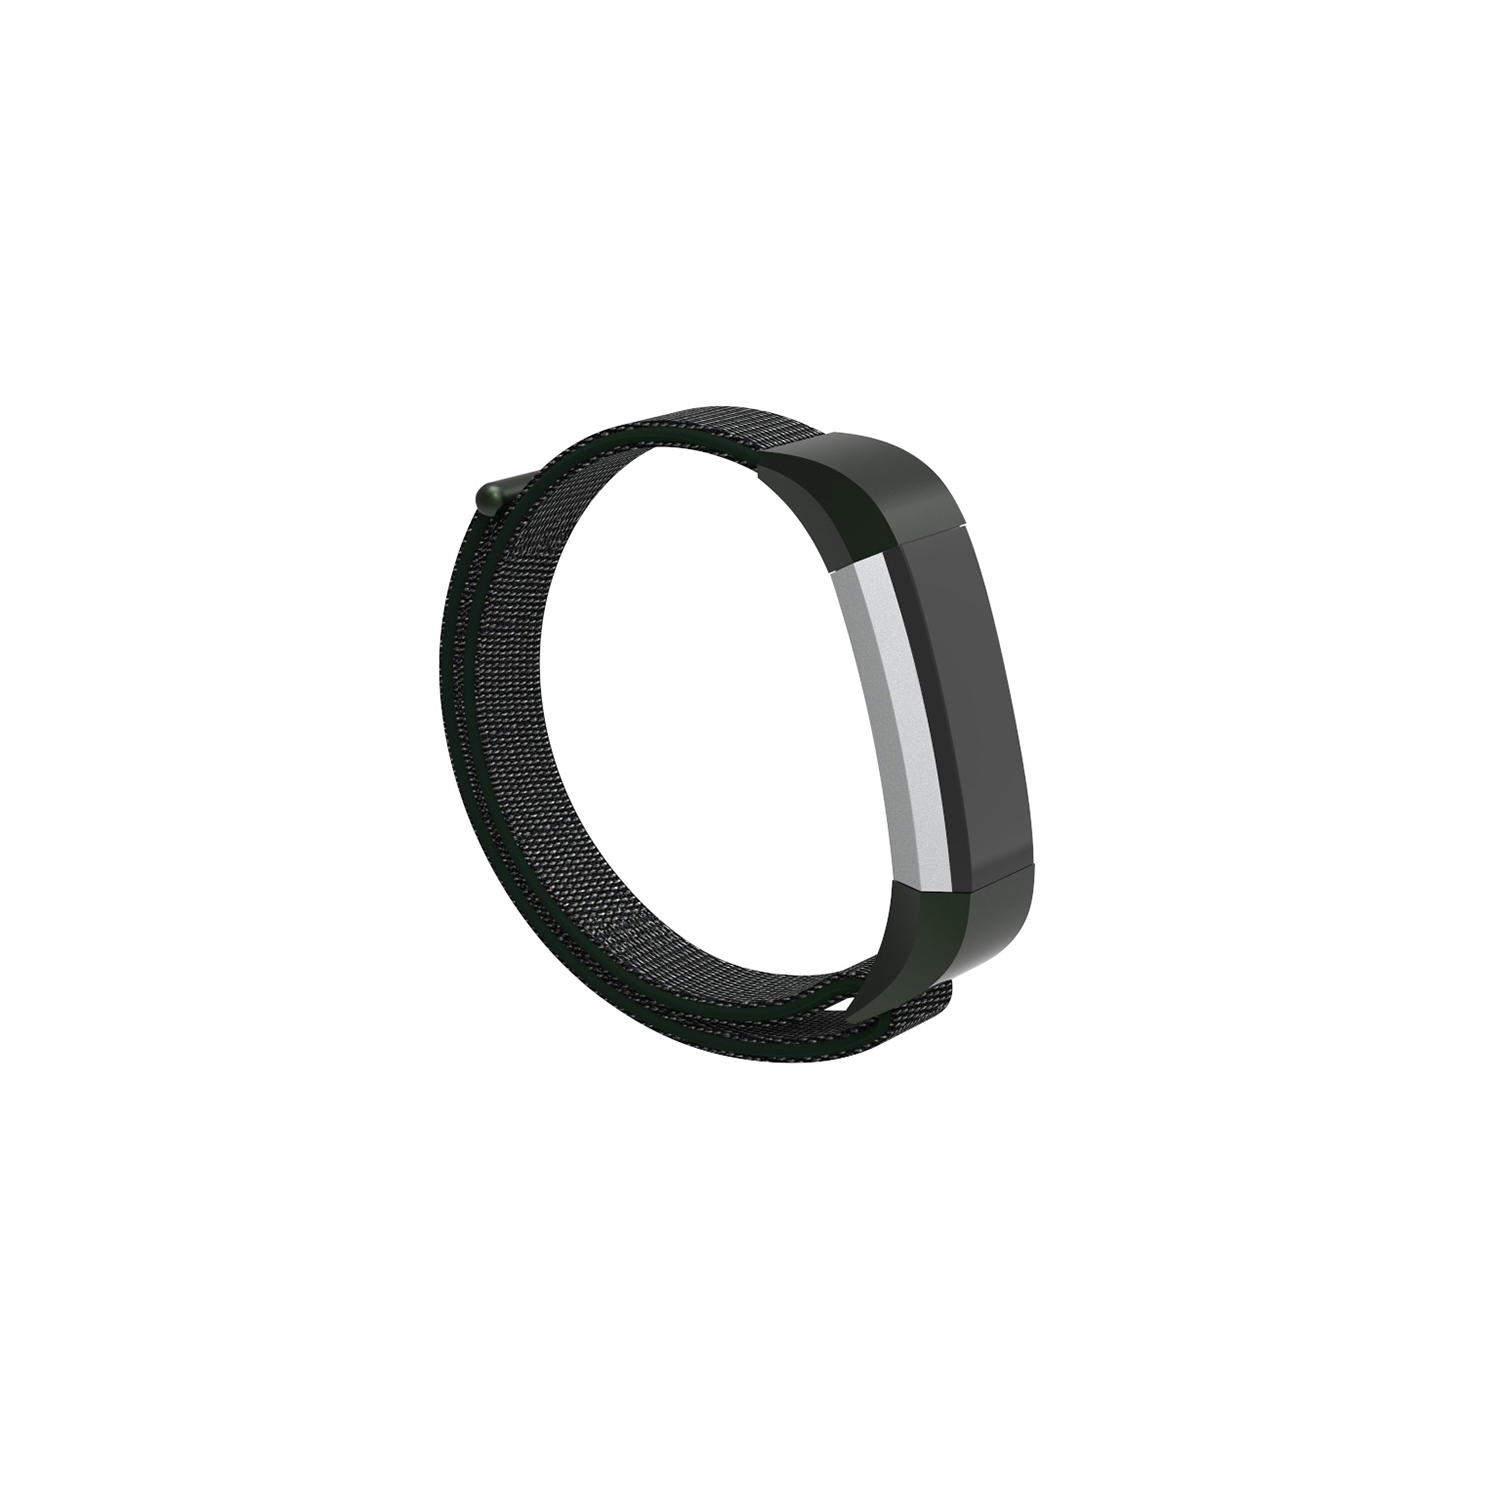 StrapsCo Woven Nylon Watch Band Strap for Fitbit Alta & Alta HR - Olive Green & Grey